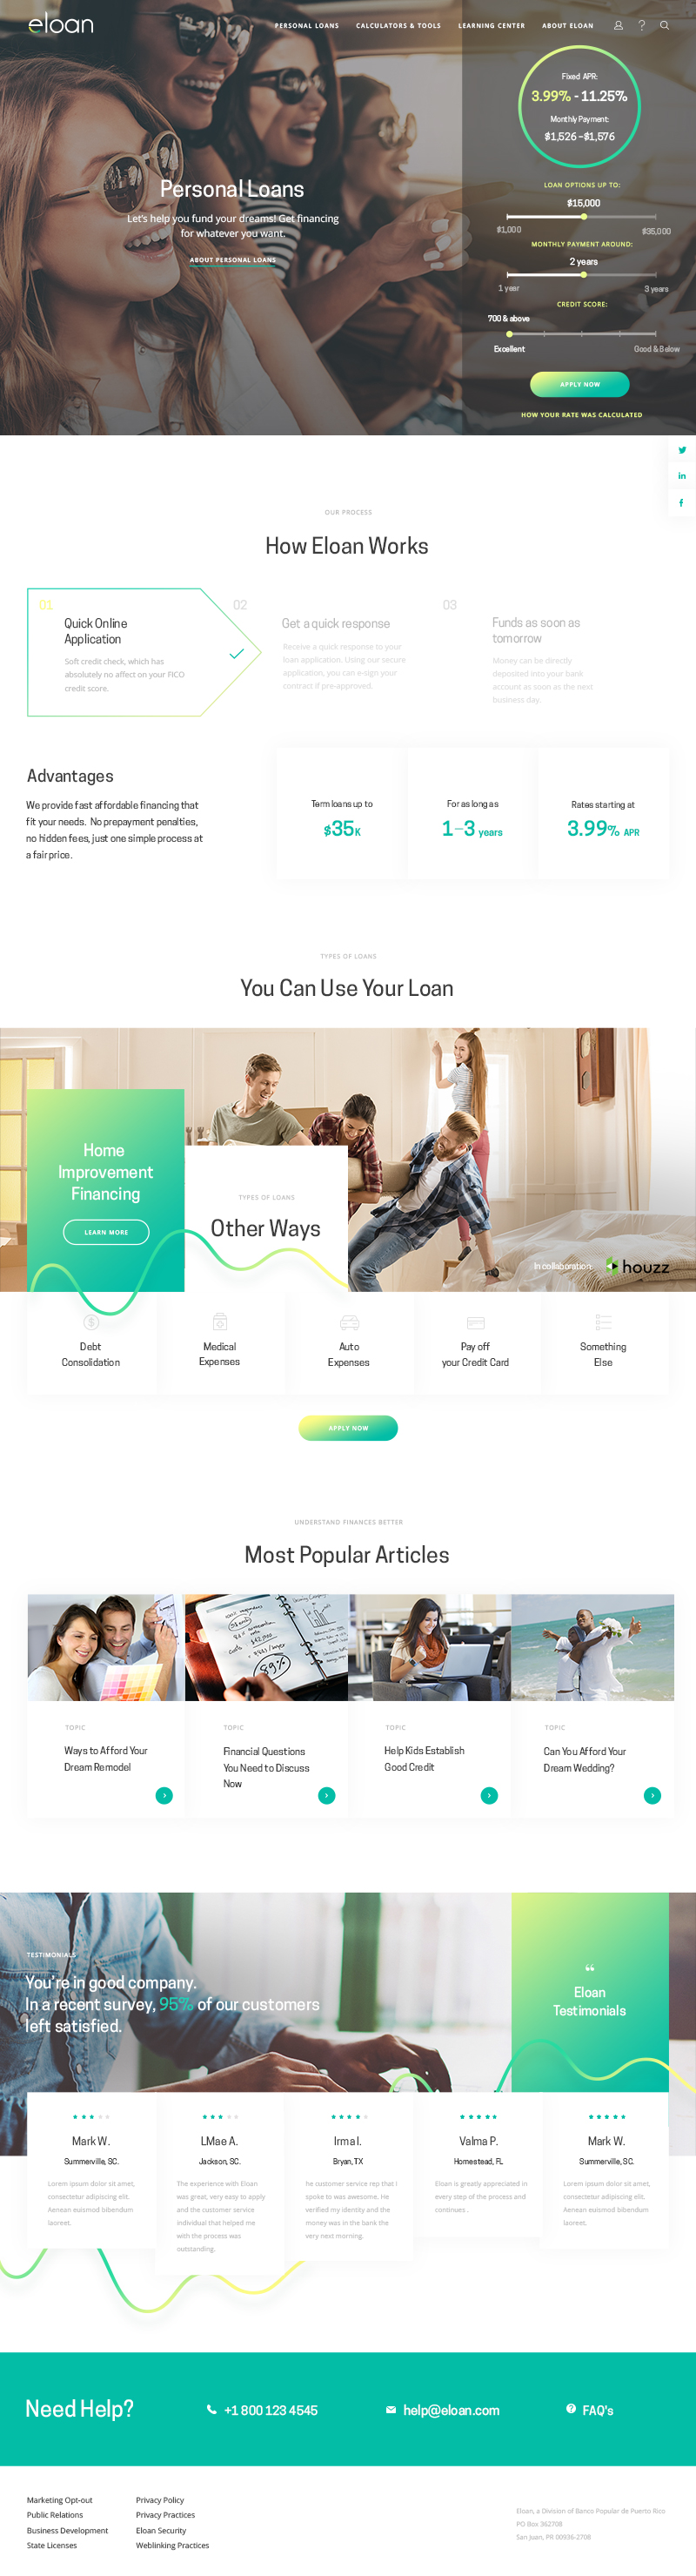 Eloan's Home Page Design & Development